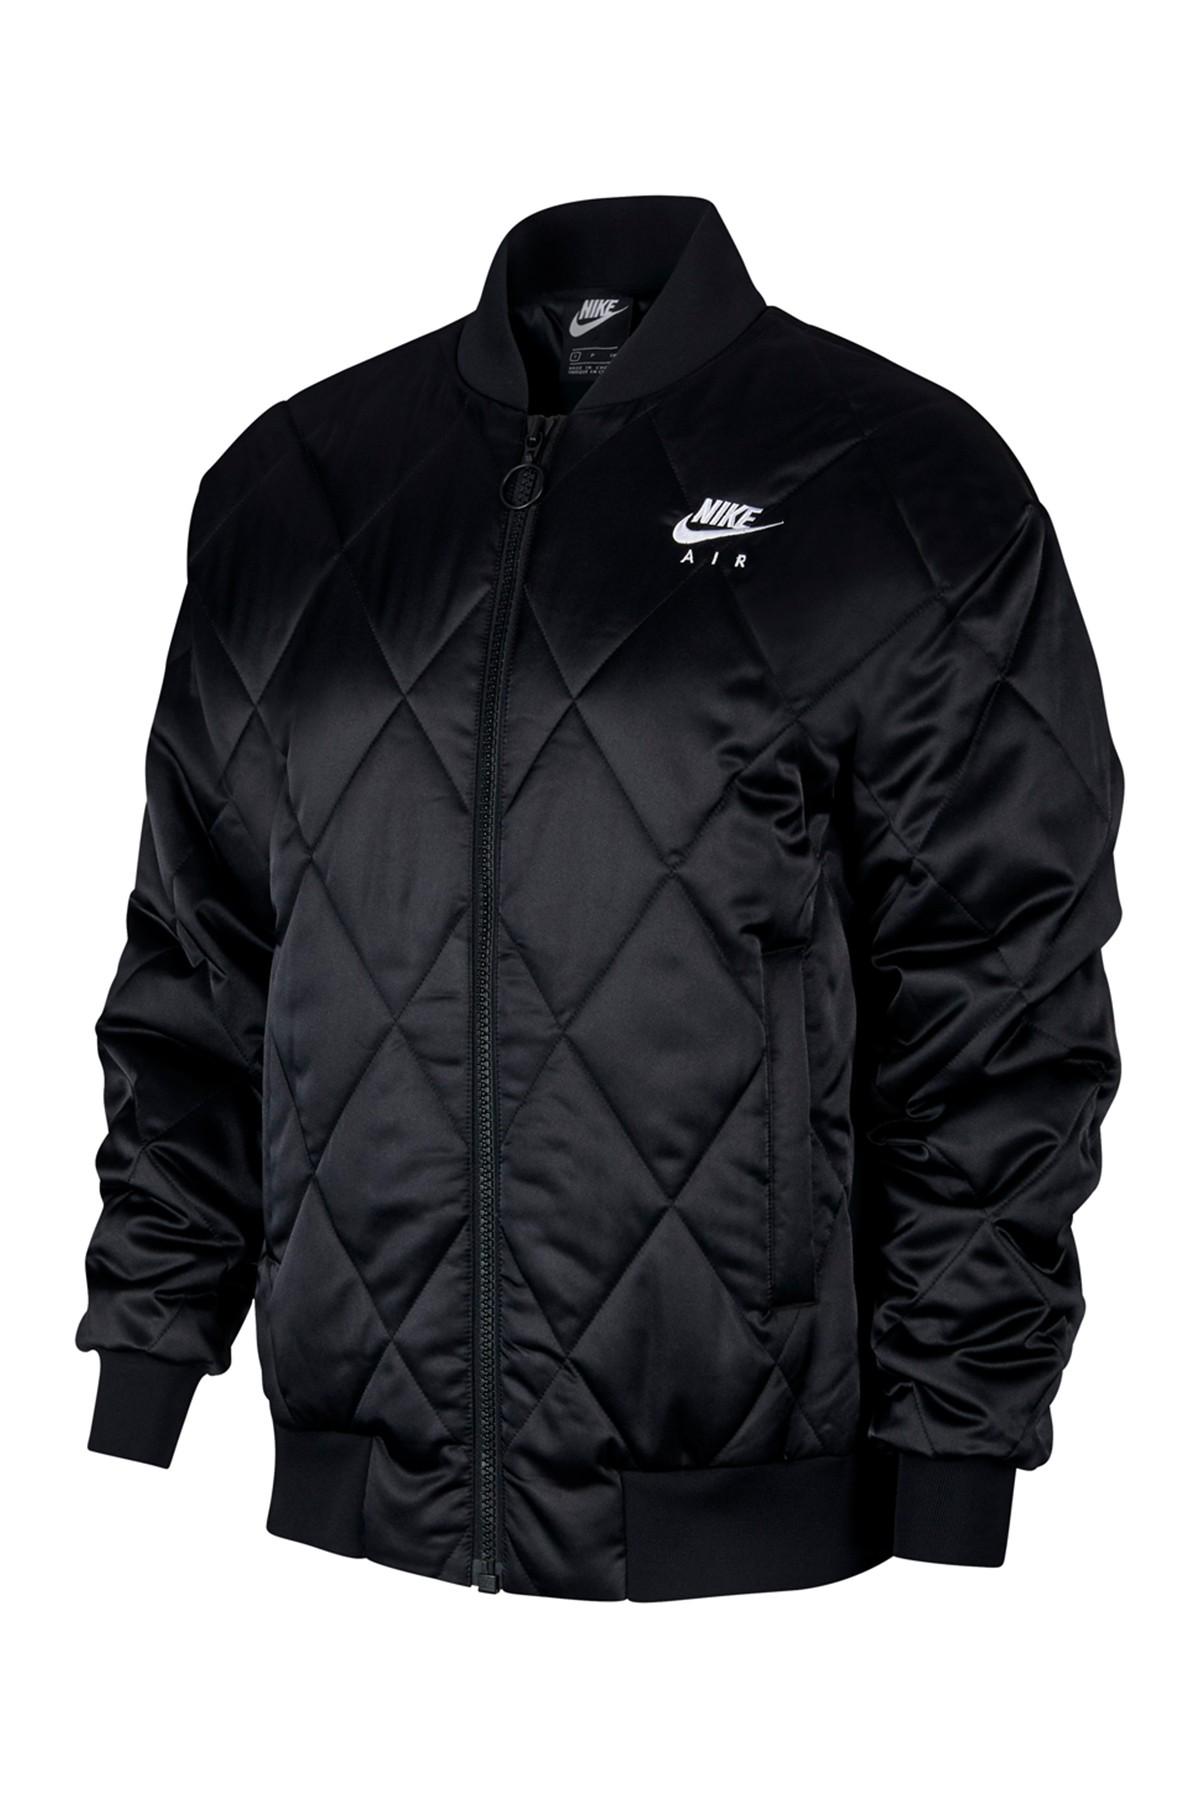 Nike Air bomber jacket in black